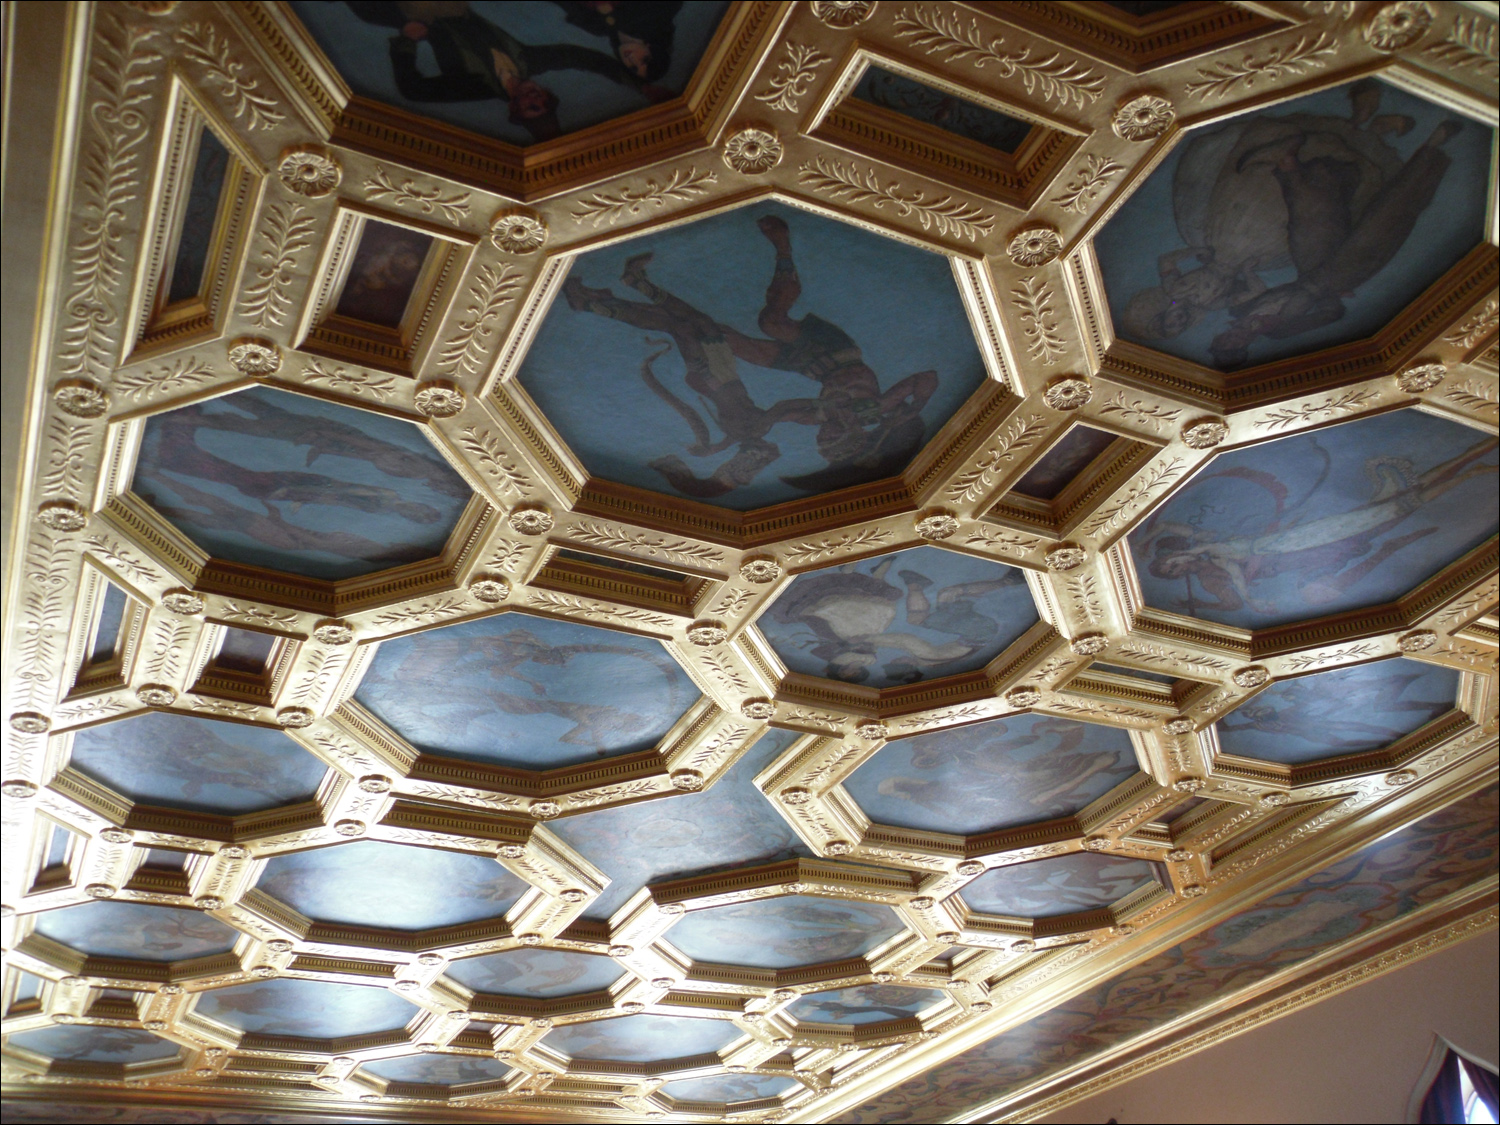 John & Mabel Ringling Museum-Ca' d'Zan mansion-ballroom ceiling dancing couples